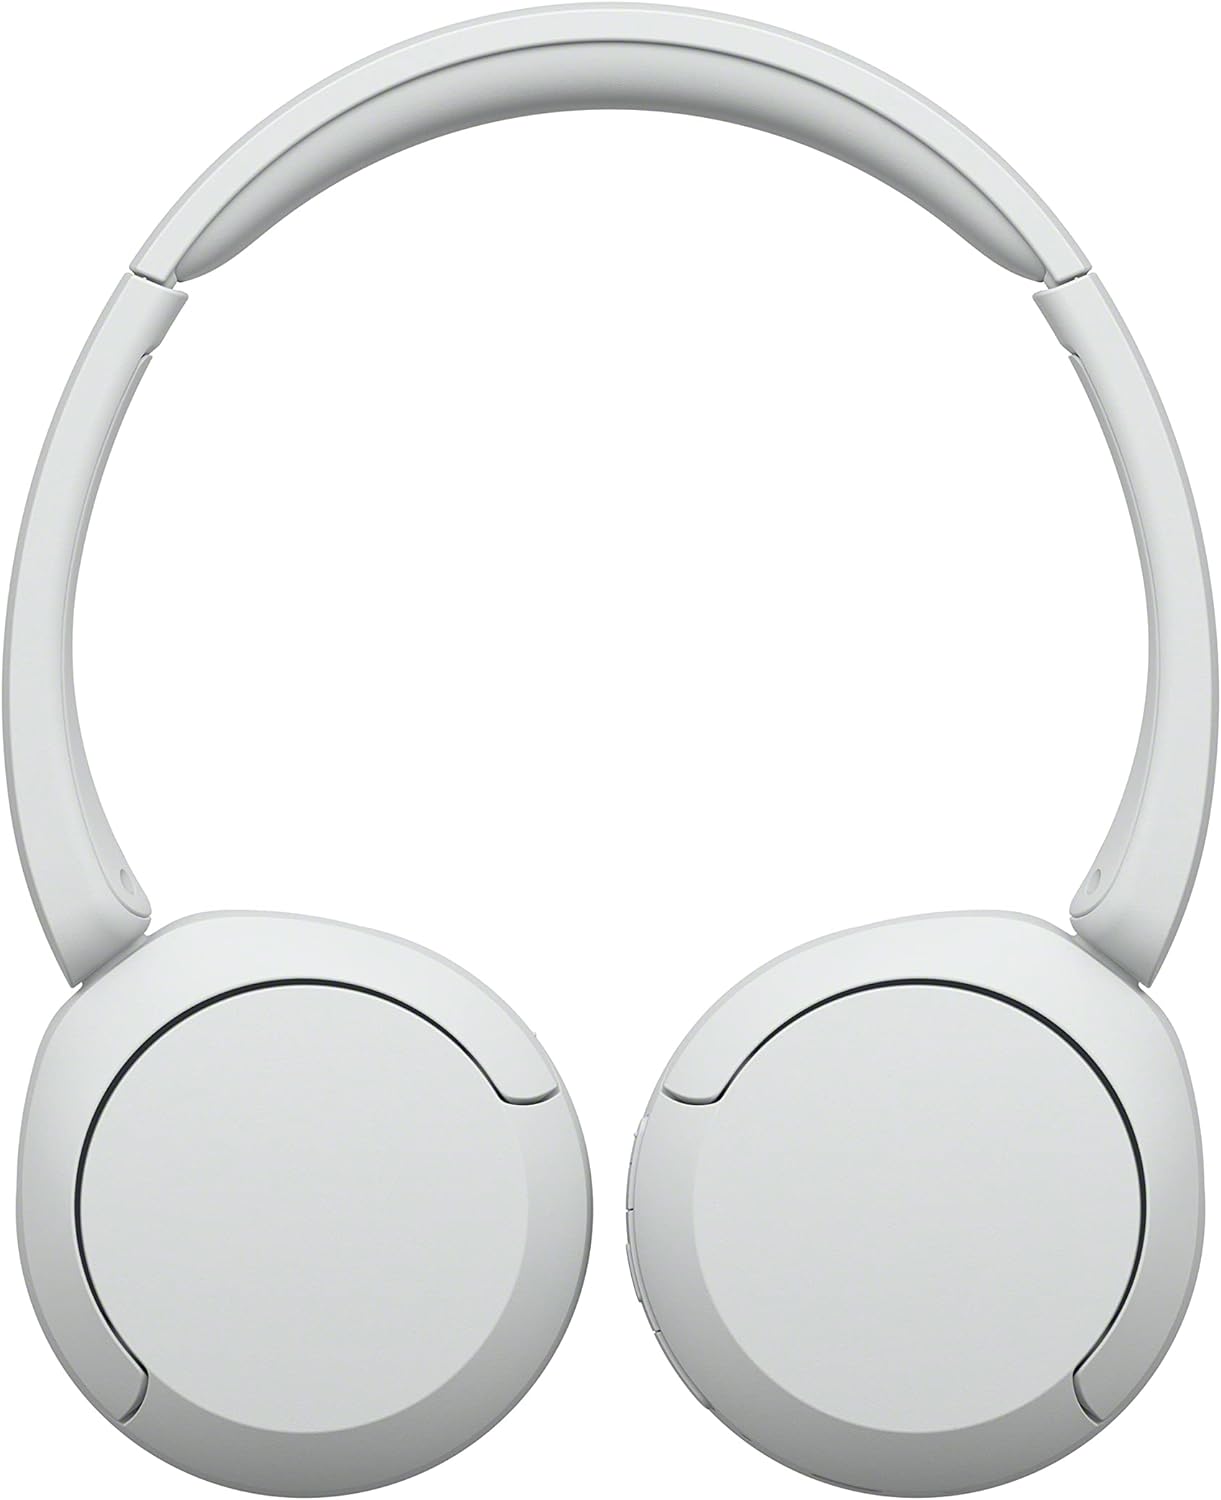 Copy of Sony Bluetooth Headphones White | WHCH520WCE7